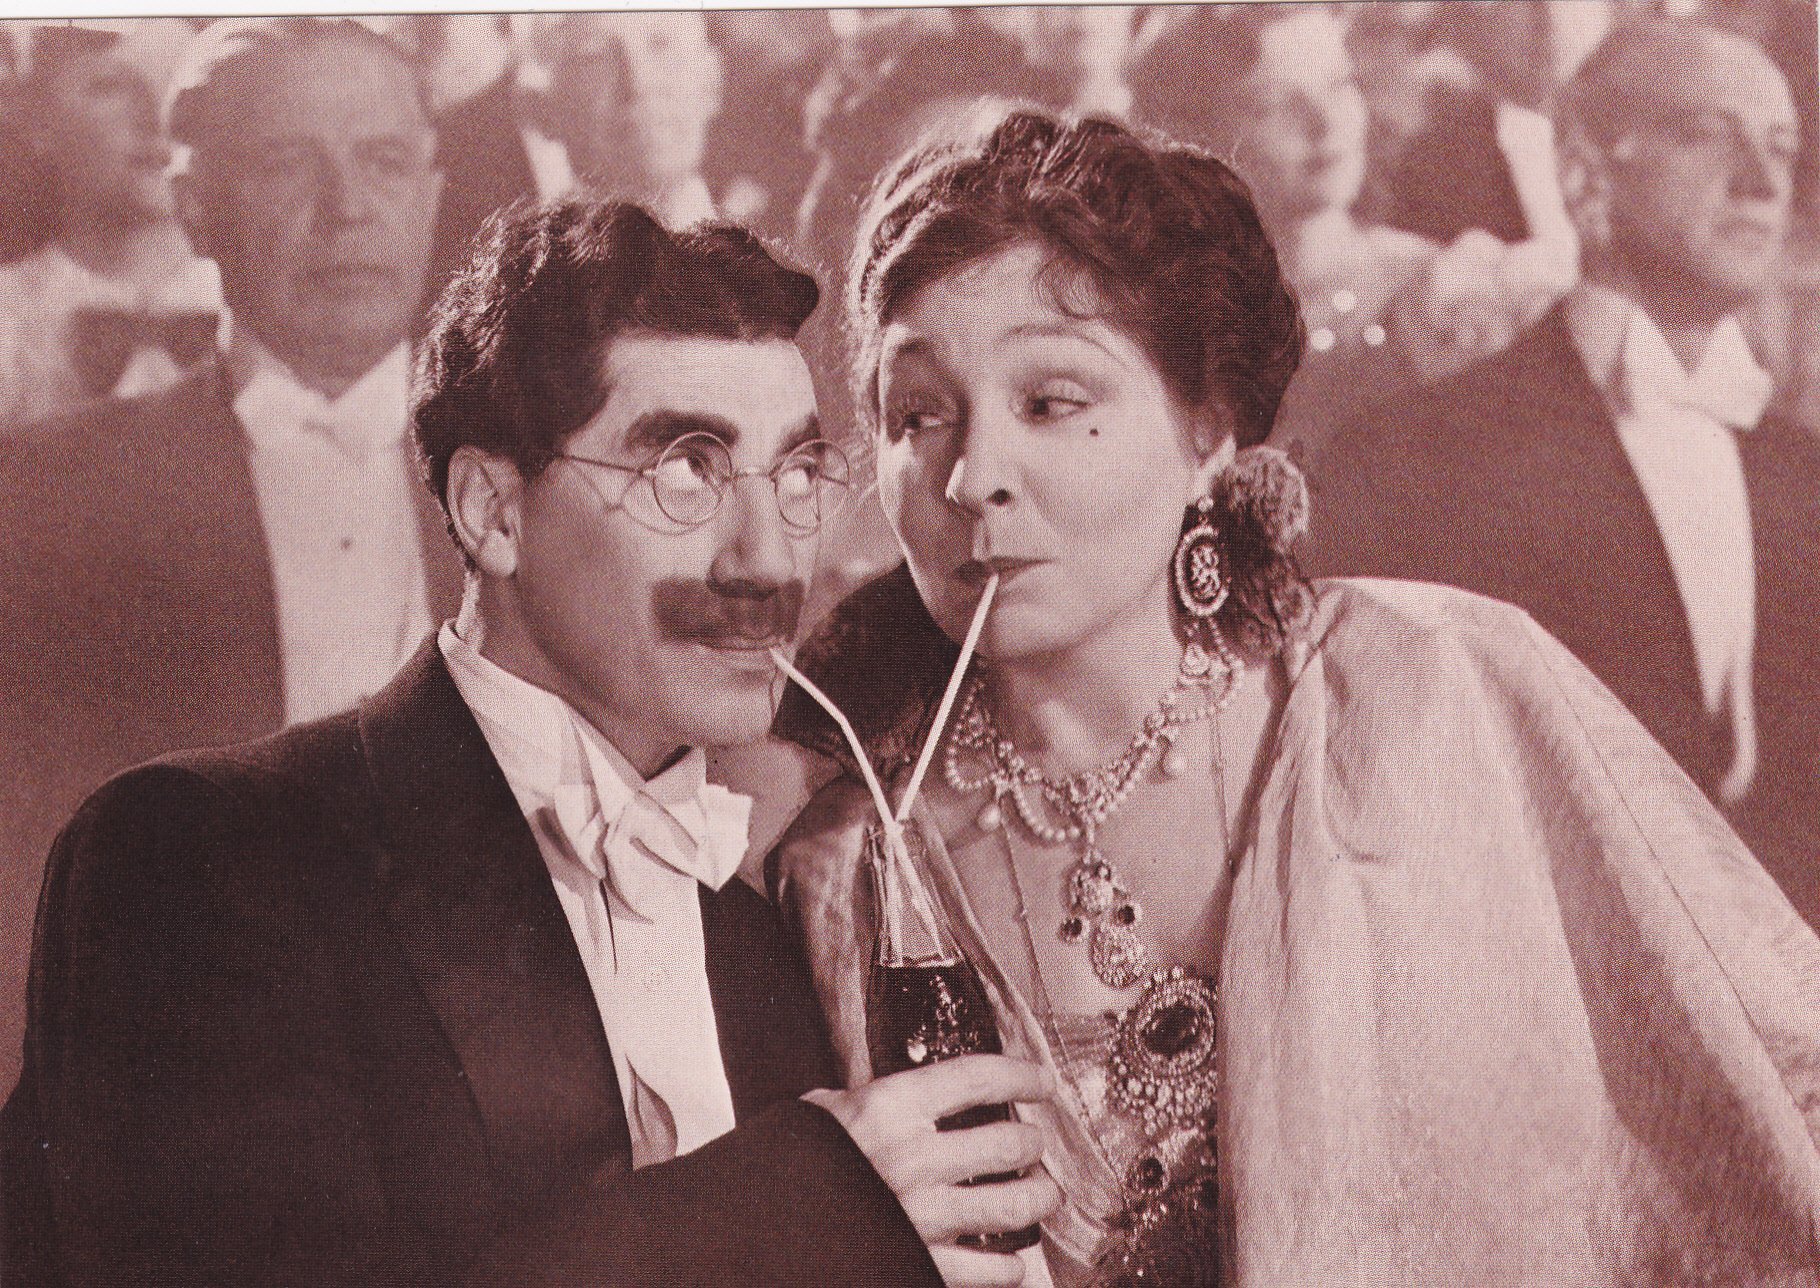 Groucho Marx and Margaret Dumont